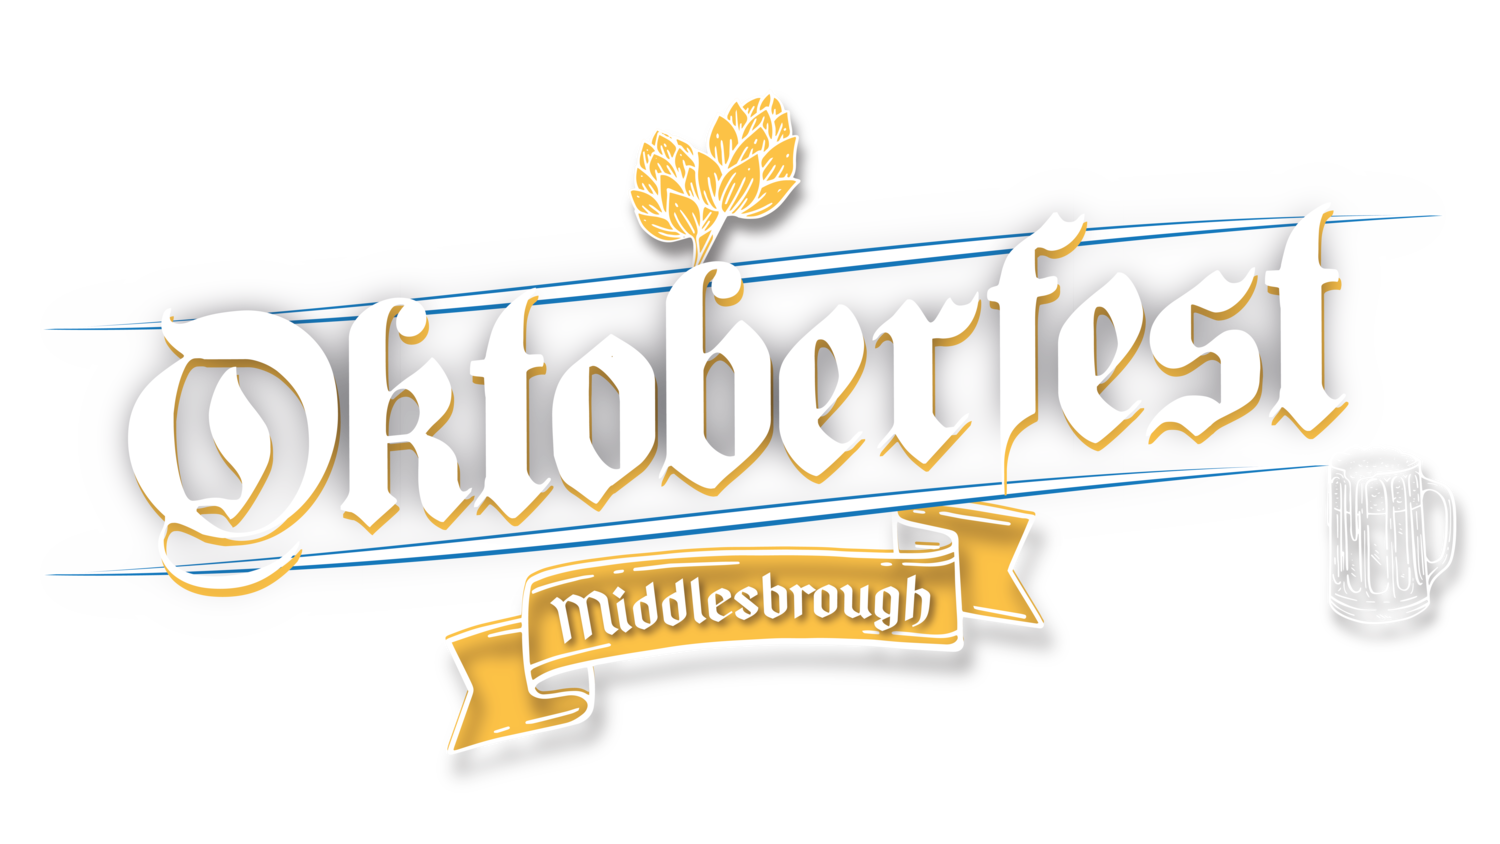 Oktoberfest Middlesbrough